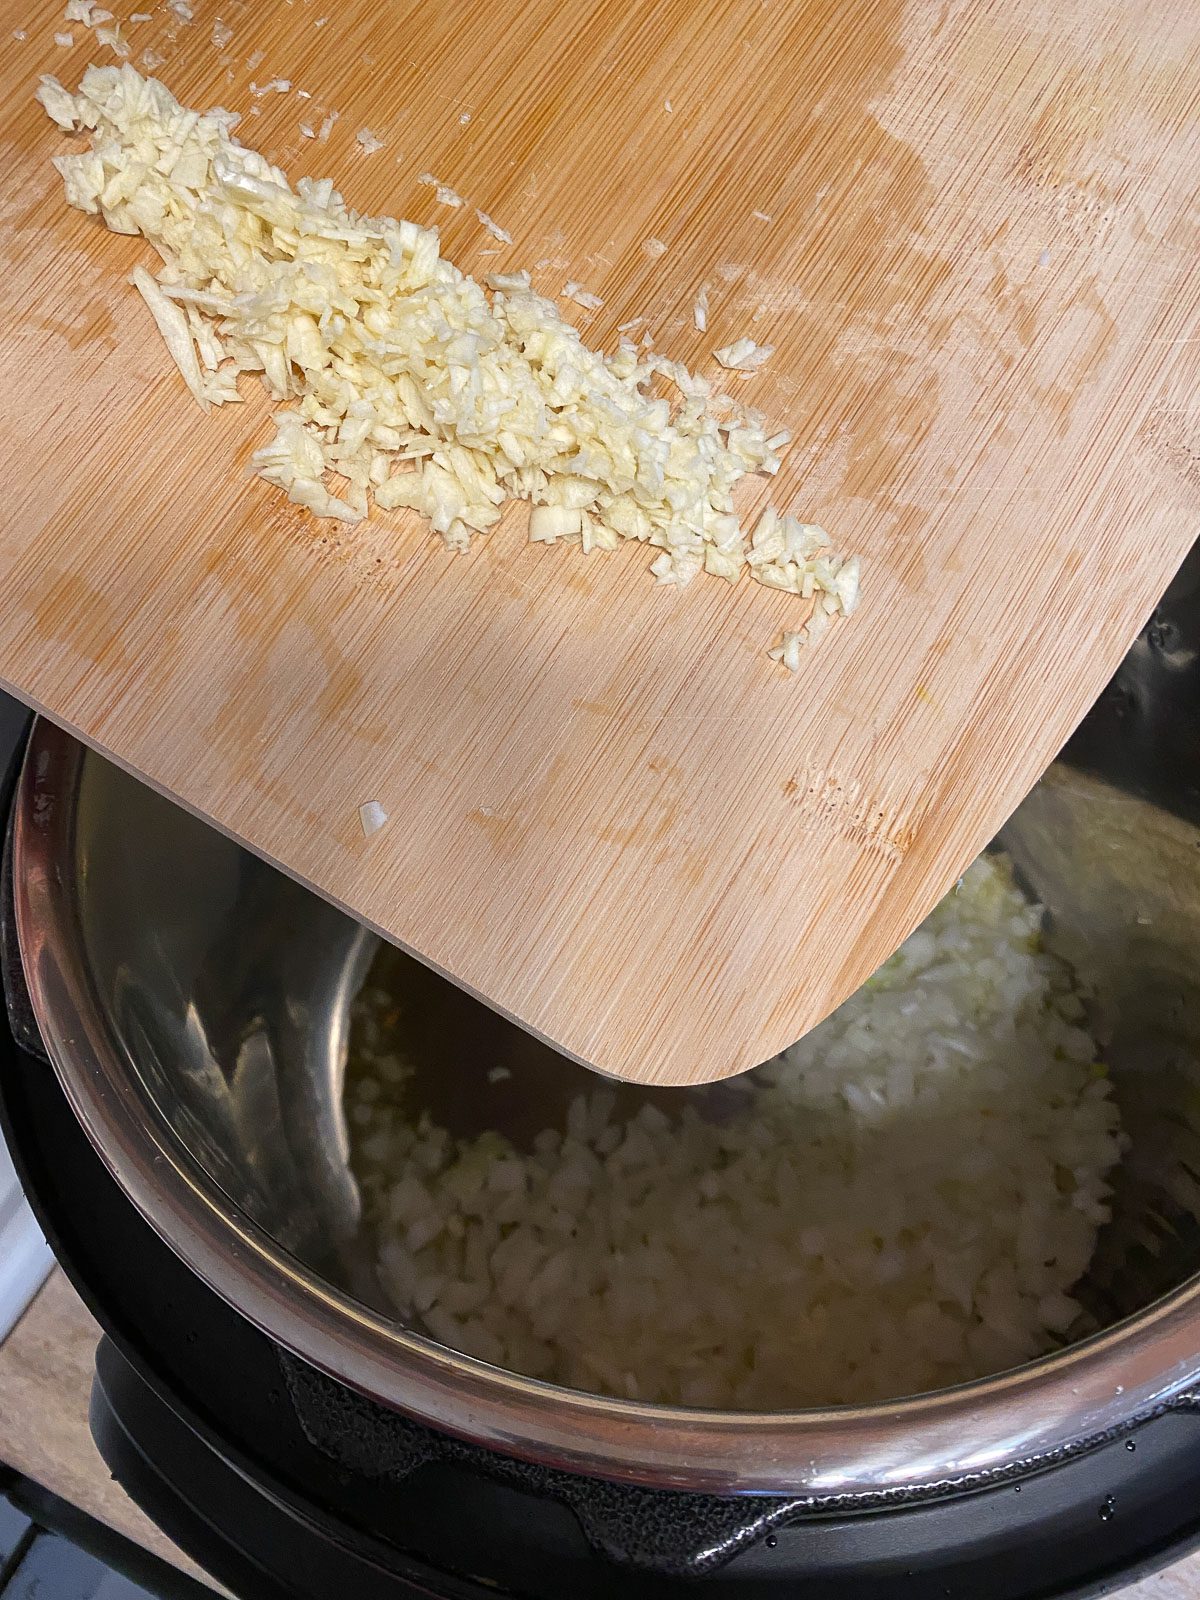 process of adding onion to pot